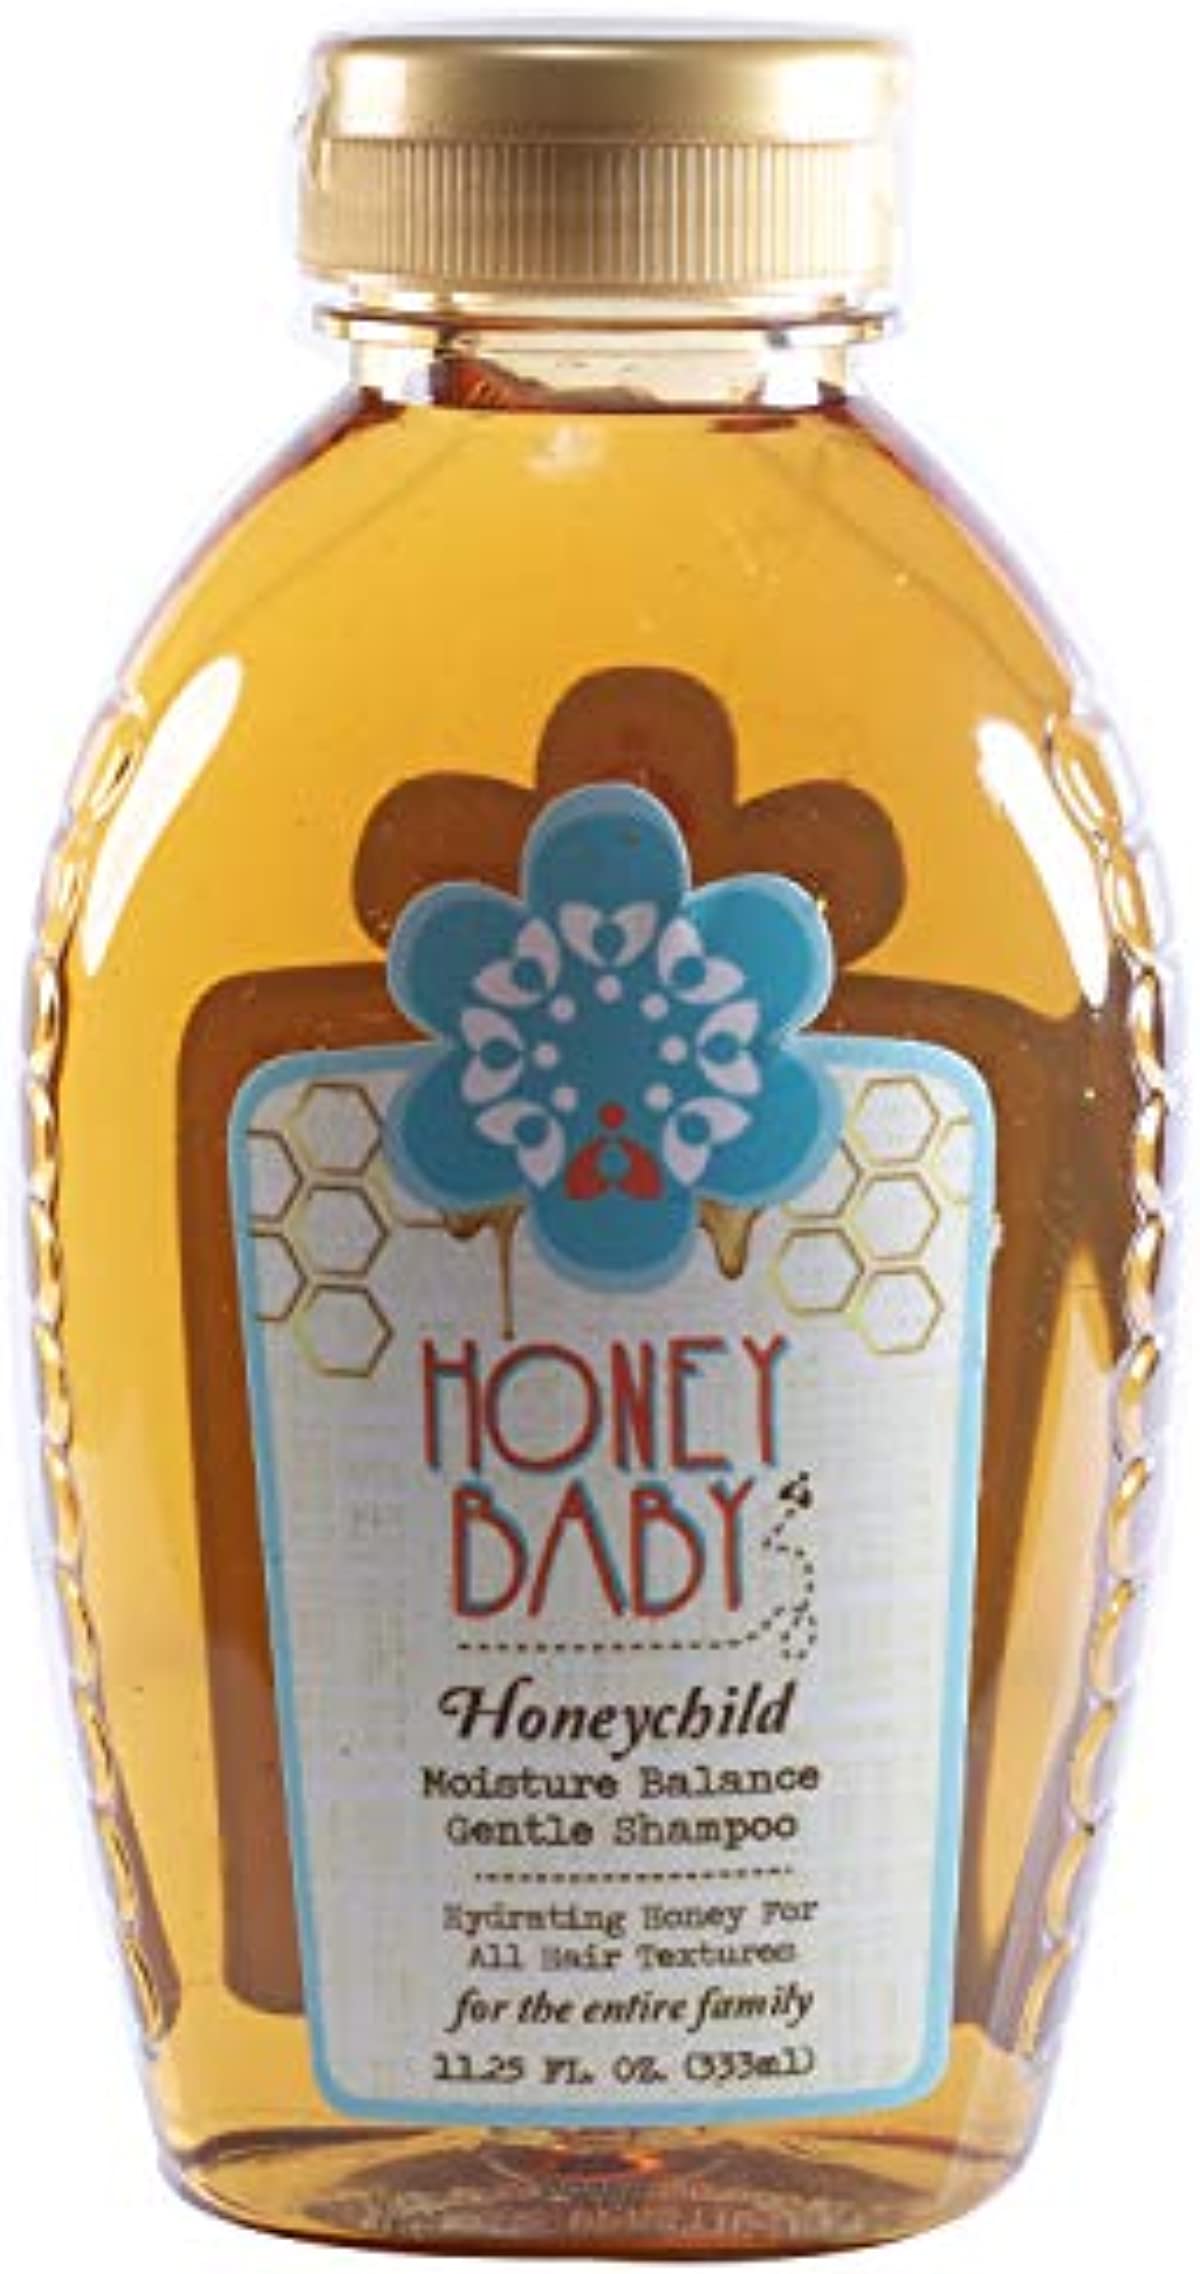 HONEY BABY Gentle Shampoo 11.25, 1 Pound